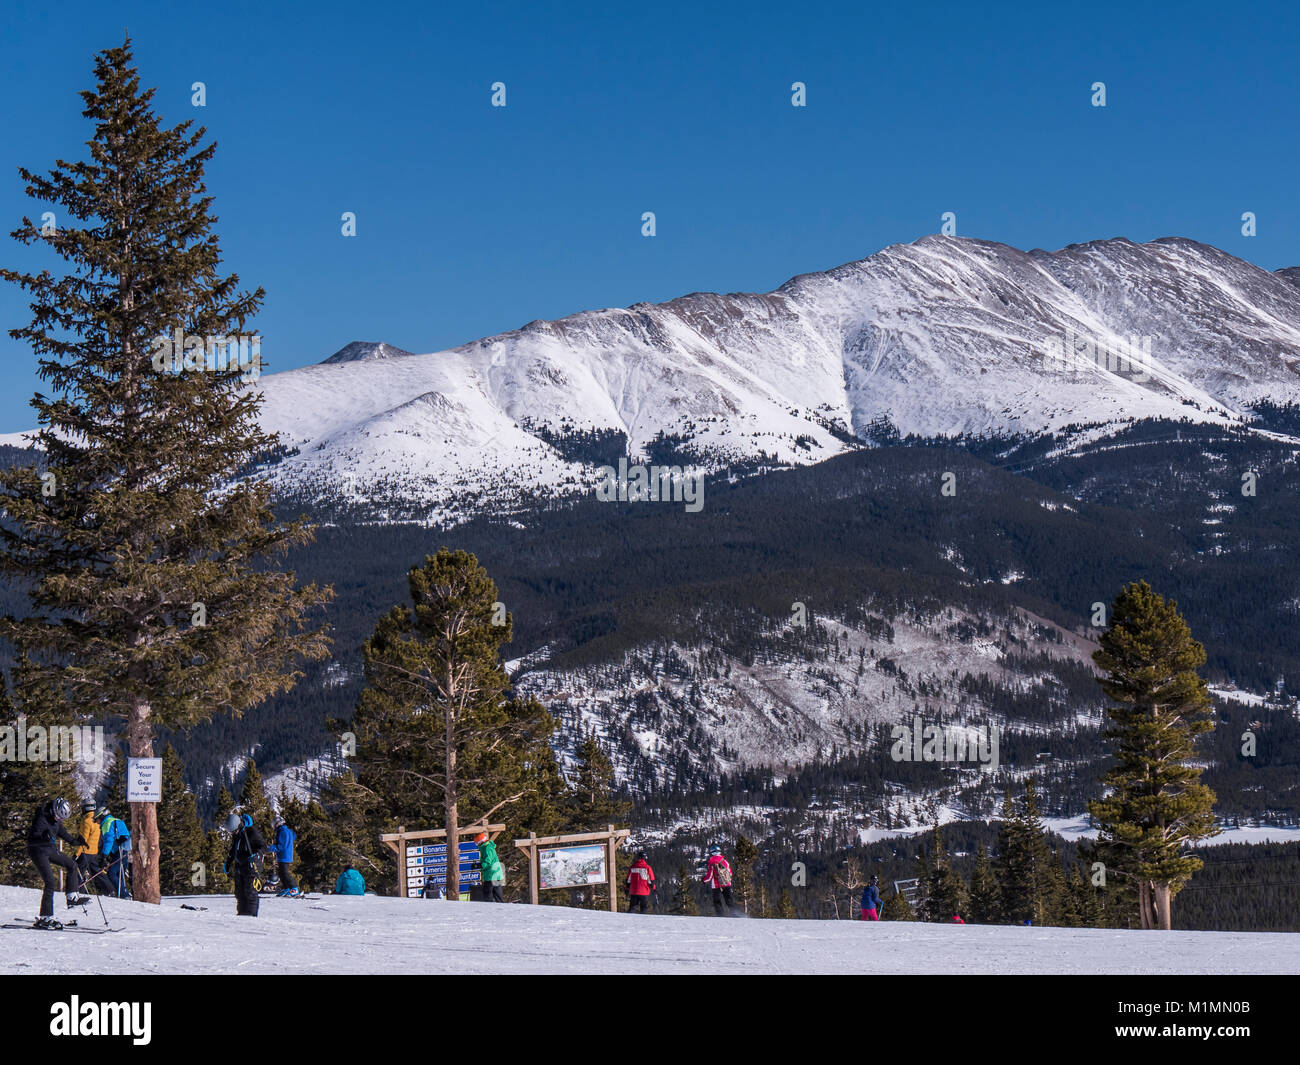 View from The Overlook day lodge and restaurant atop Peak 9, Breckenridge Ski Resort, Breckenridge, Colorado. Stock Photo